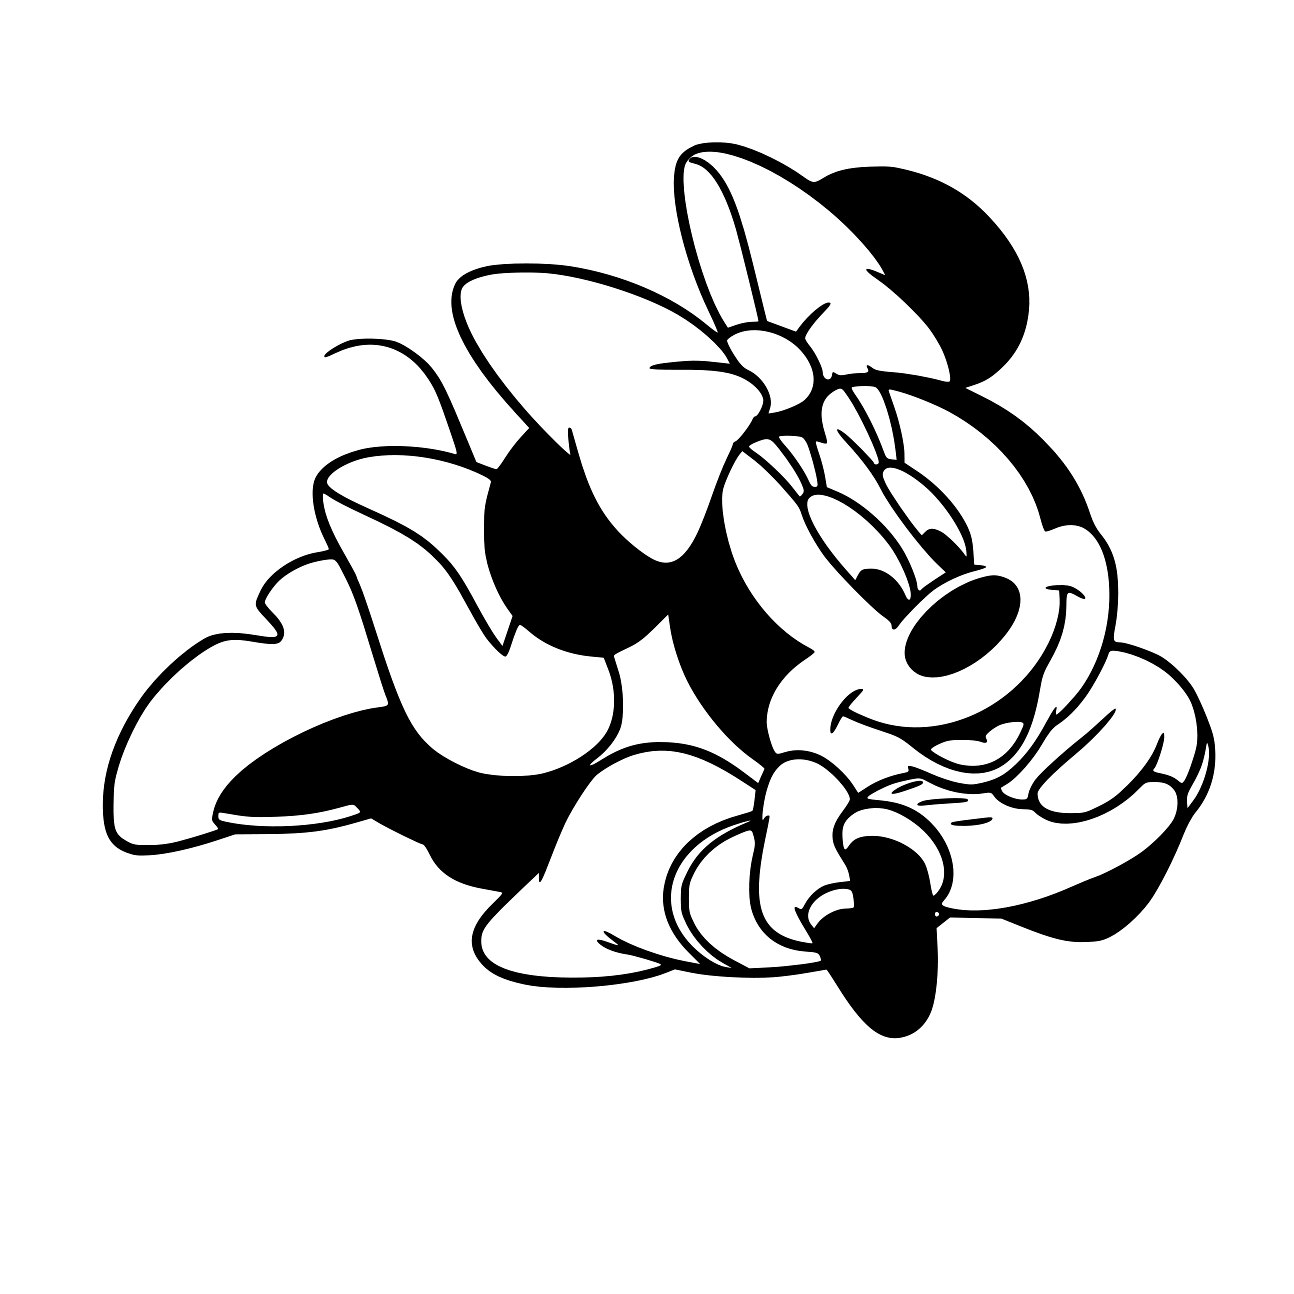 Image of Minnie lying down